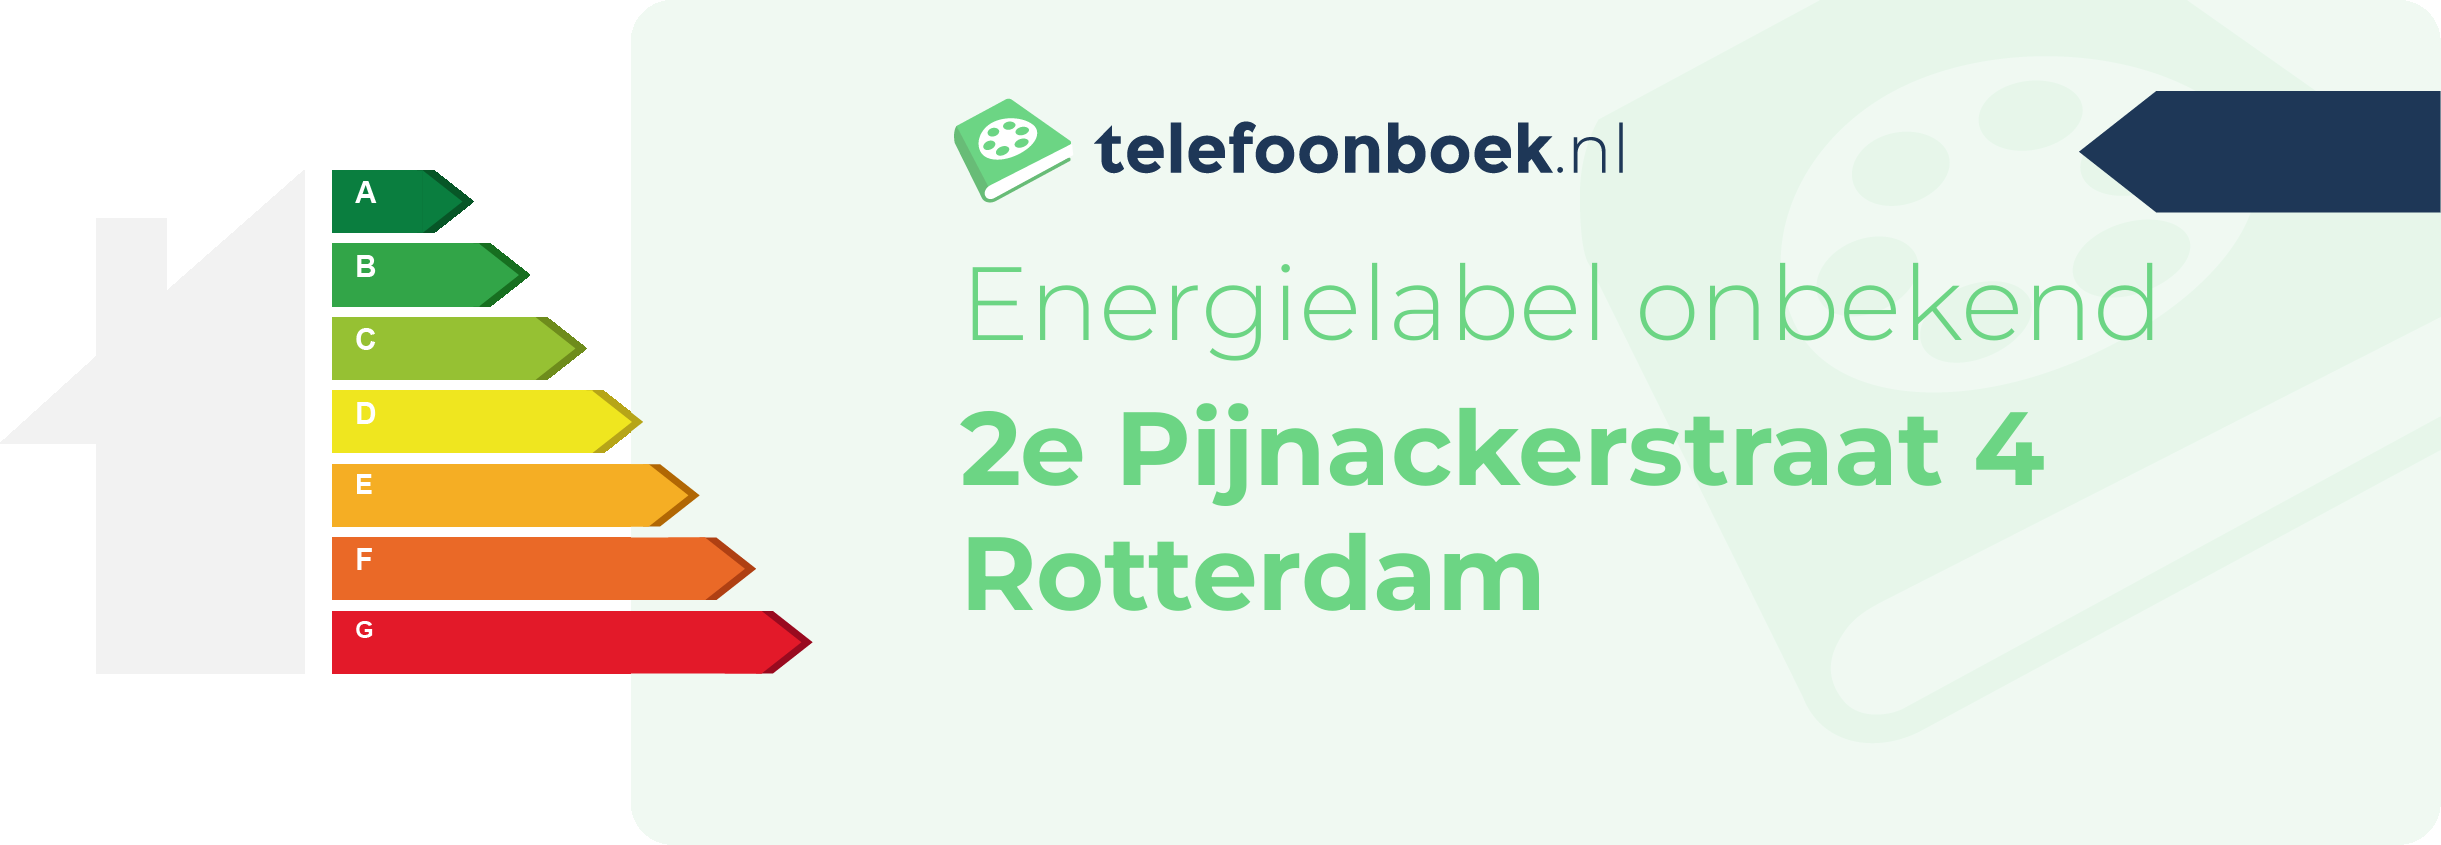 Energielabel 2e Pijnackerstraat 4 Rotterdam